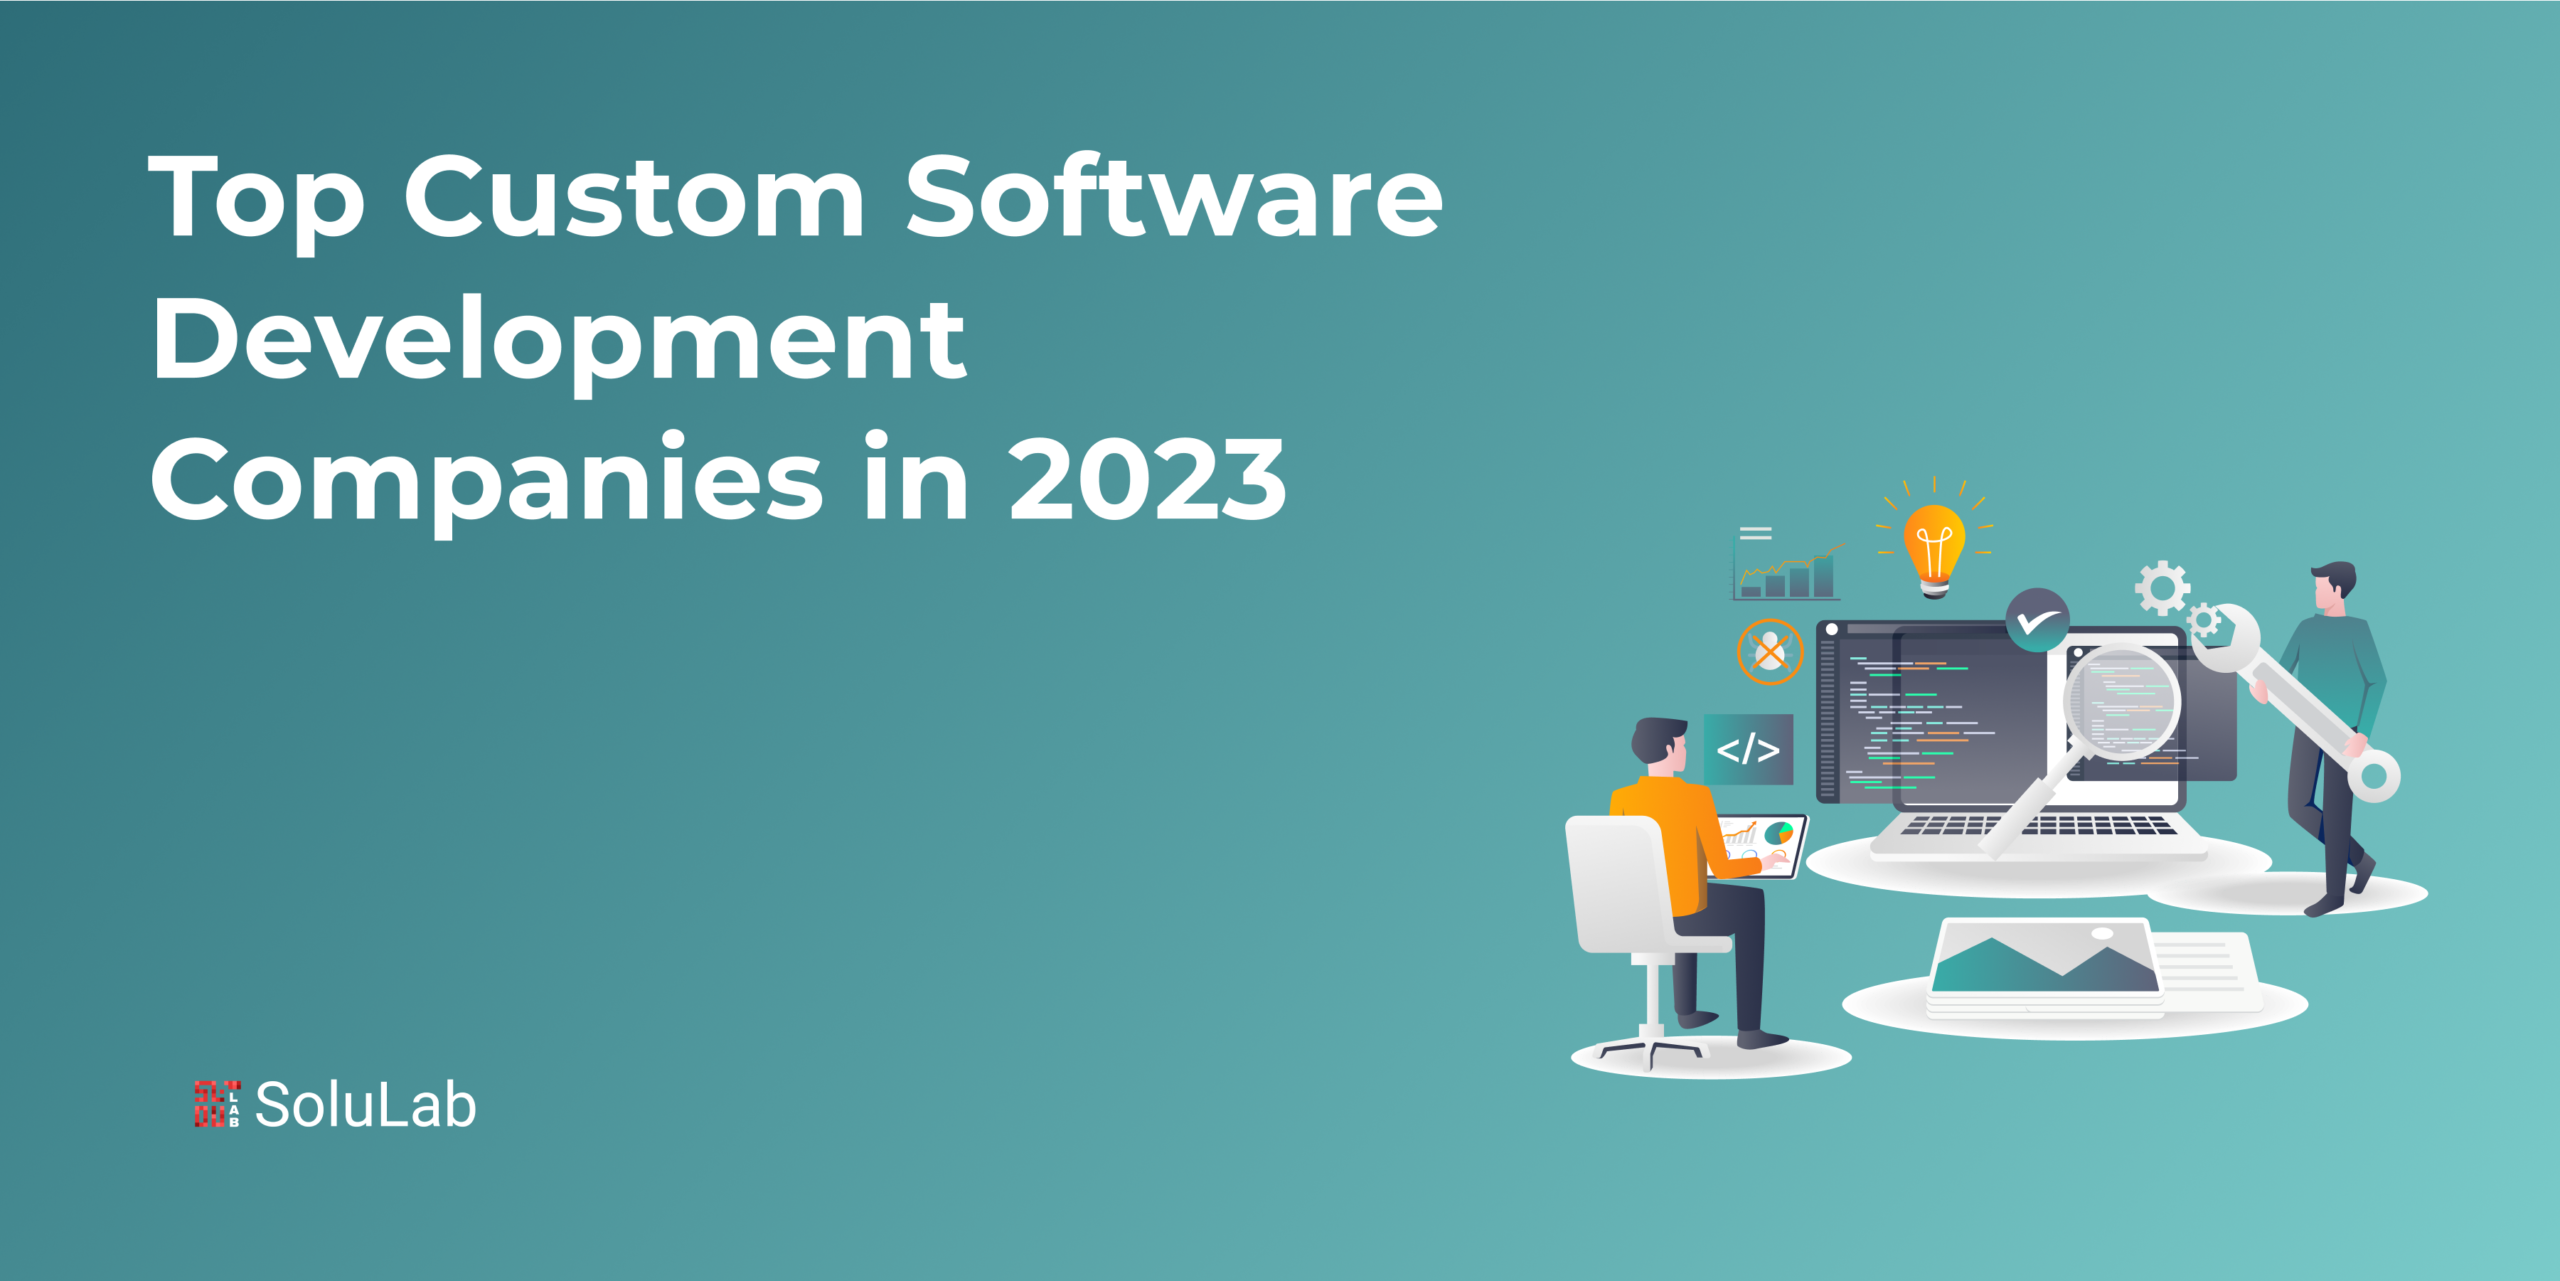 Top Custom Software Development Companies in 2023